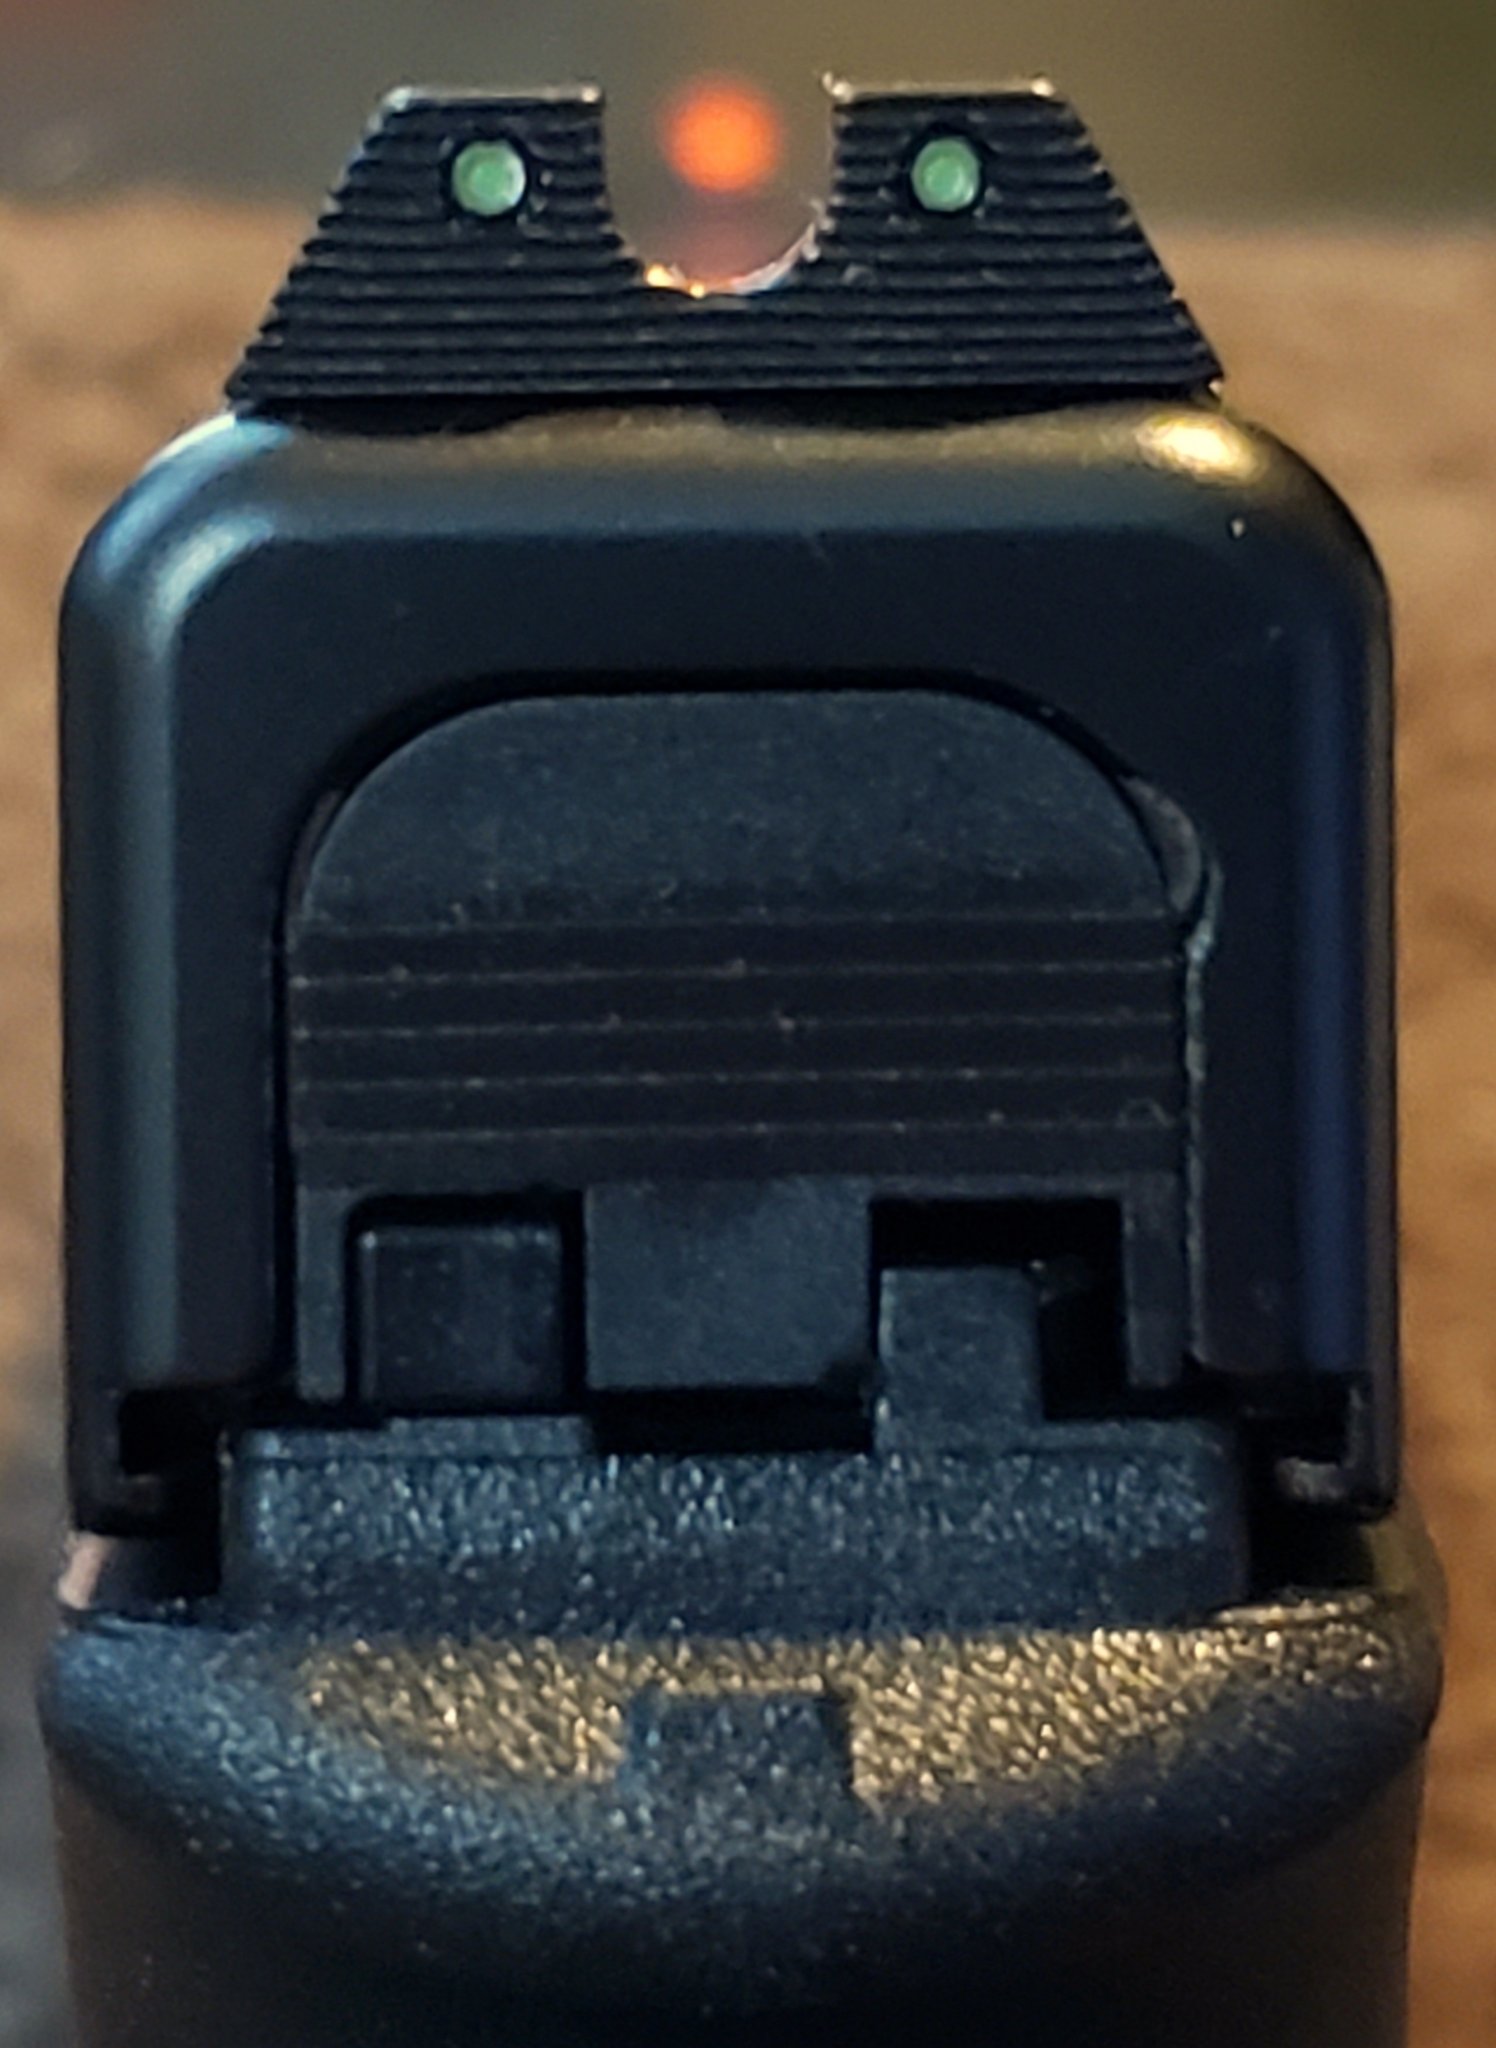 glock 17 HD sights.jpg